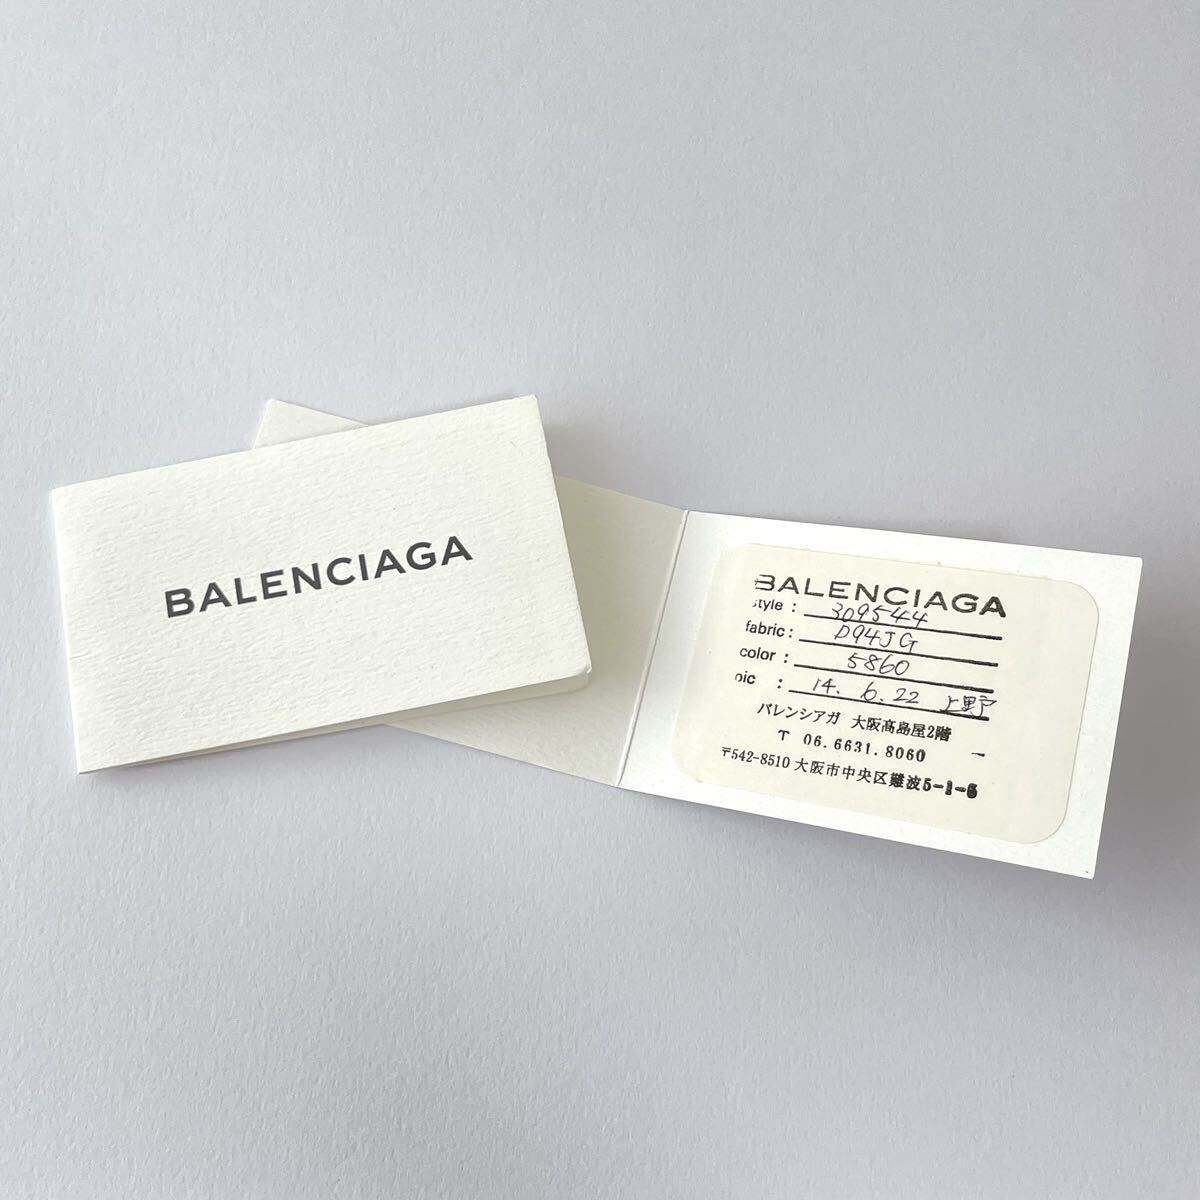 1 иен * BALENCIAGA Balenciaga ja Ian to Mini City 309544 сумка на плечо ручная сумочка розовое золото металлические принадлежности кожа женский 